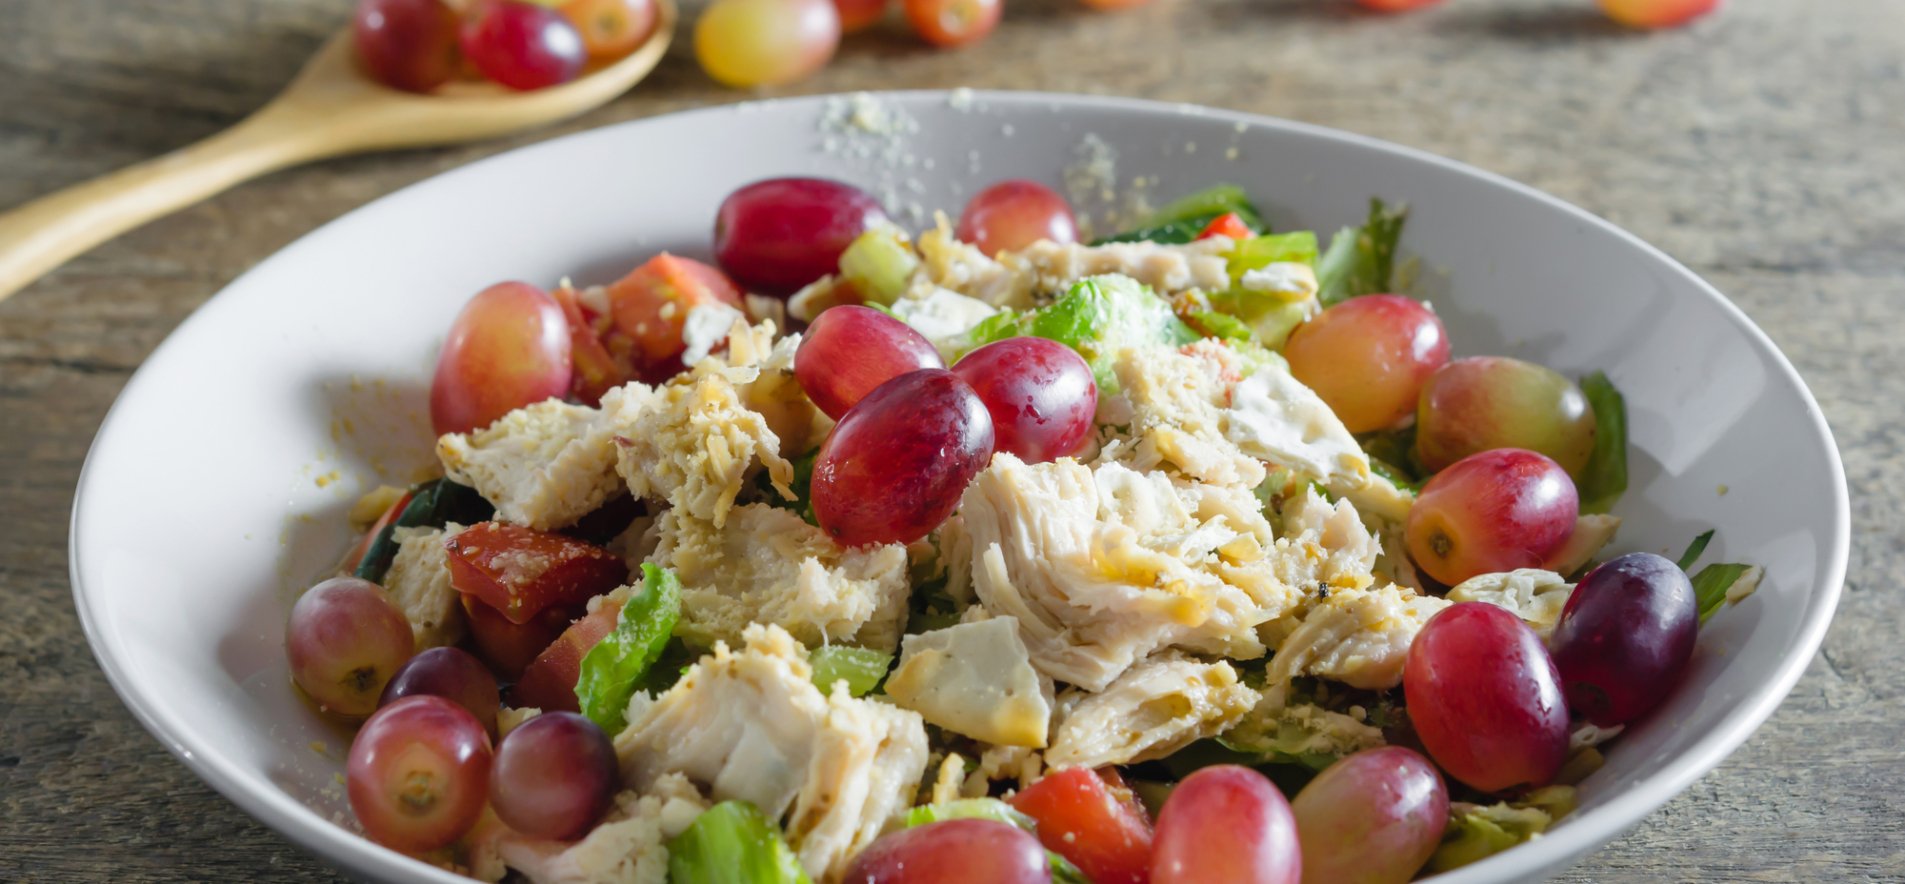 Салат из курятины и винограда – рецепт